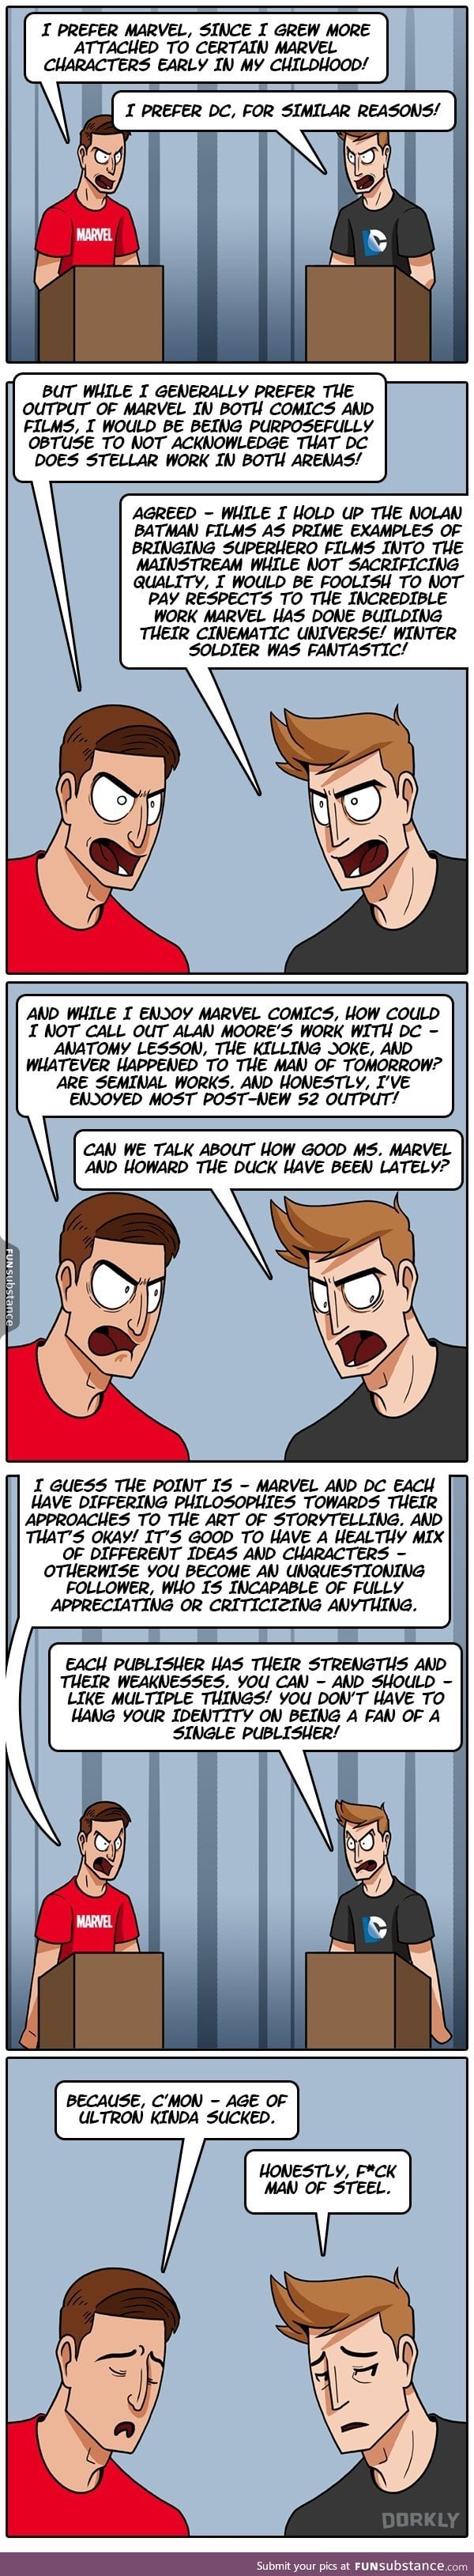 Marvel vs DC argument